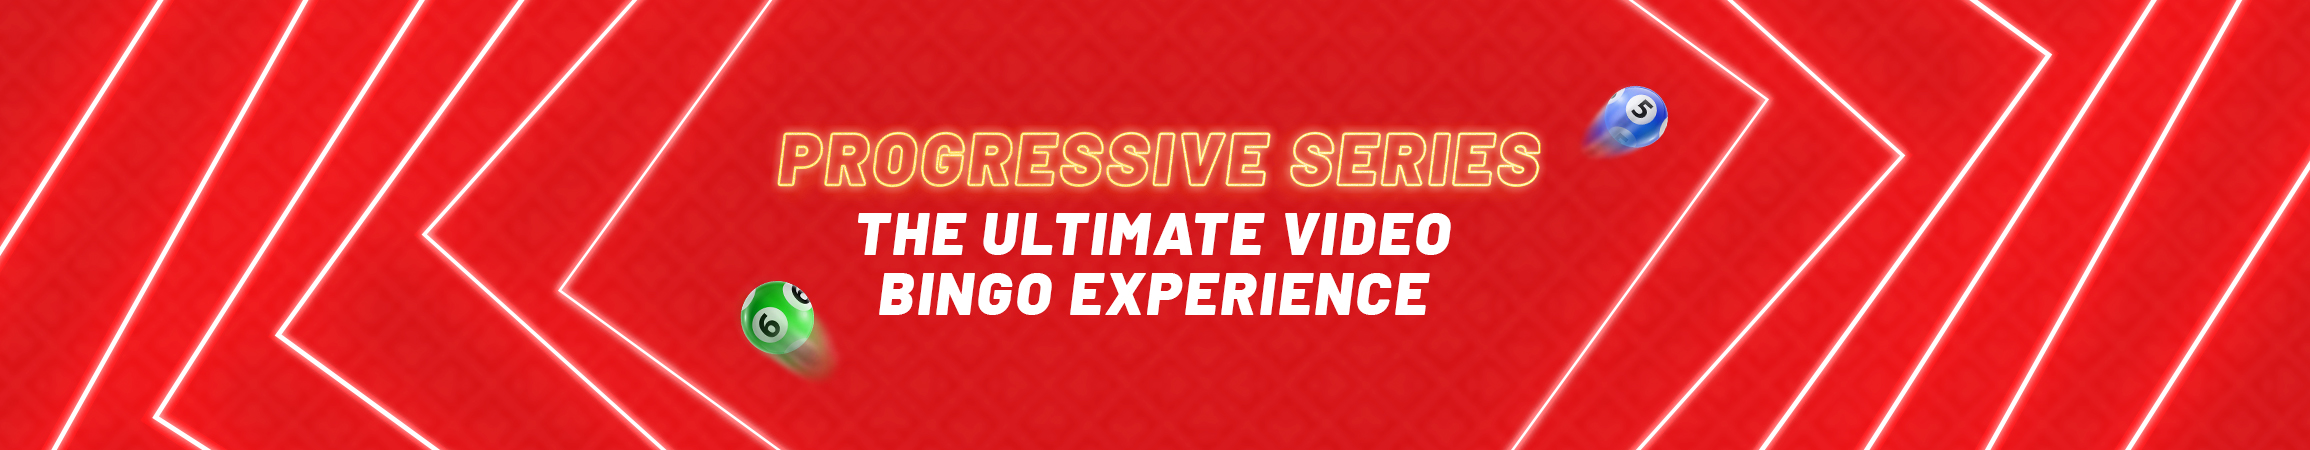 FBM®️ Progressive Series: La Experiencia Definitiva en Video Bingo